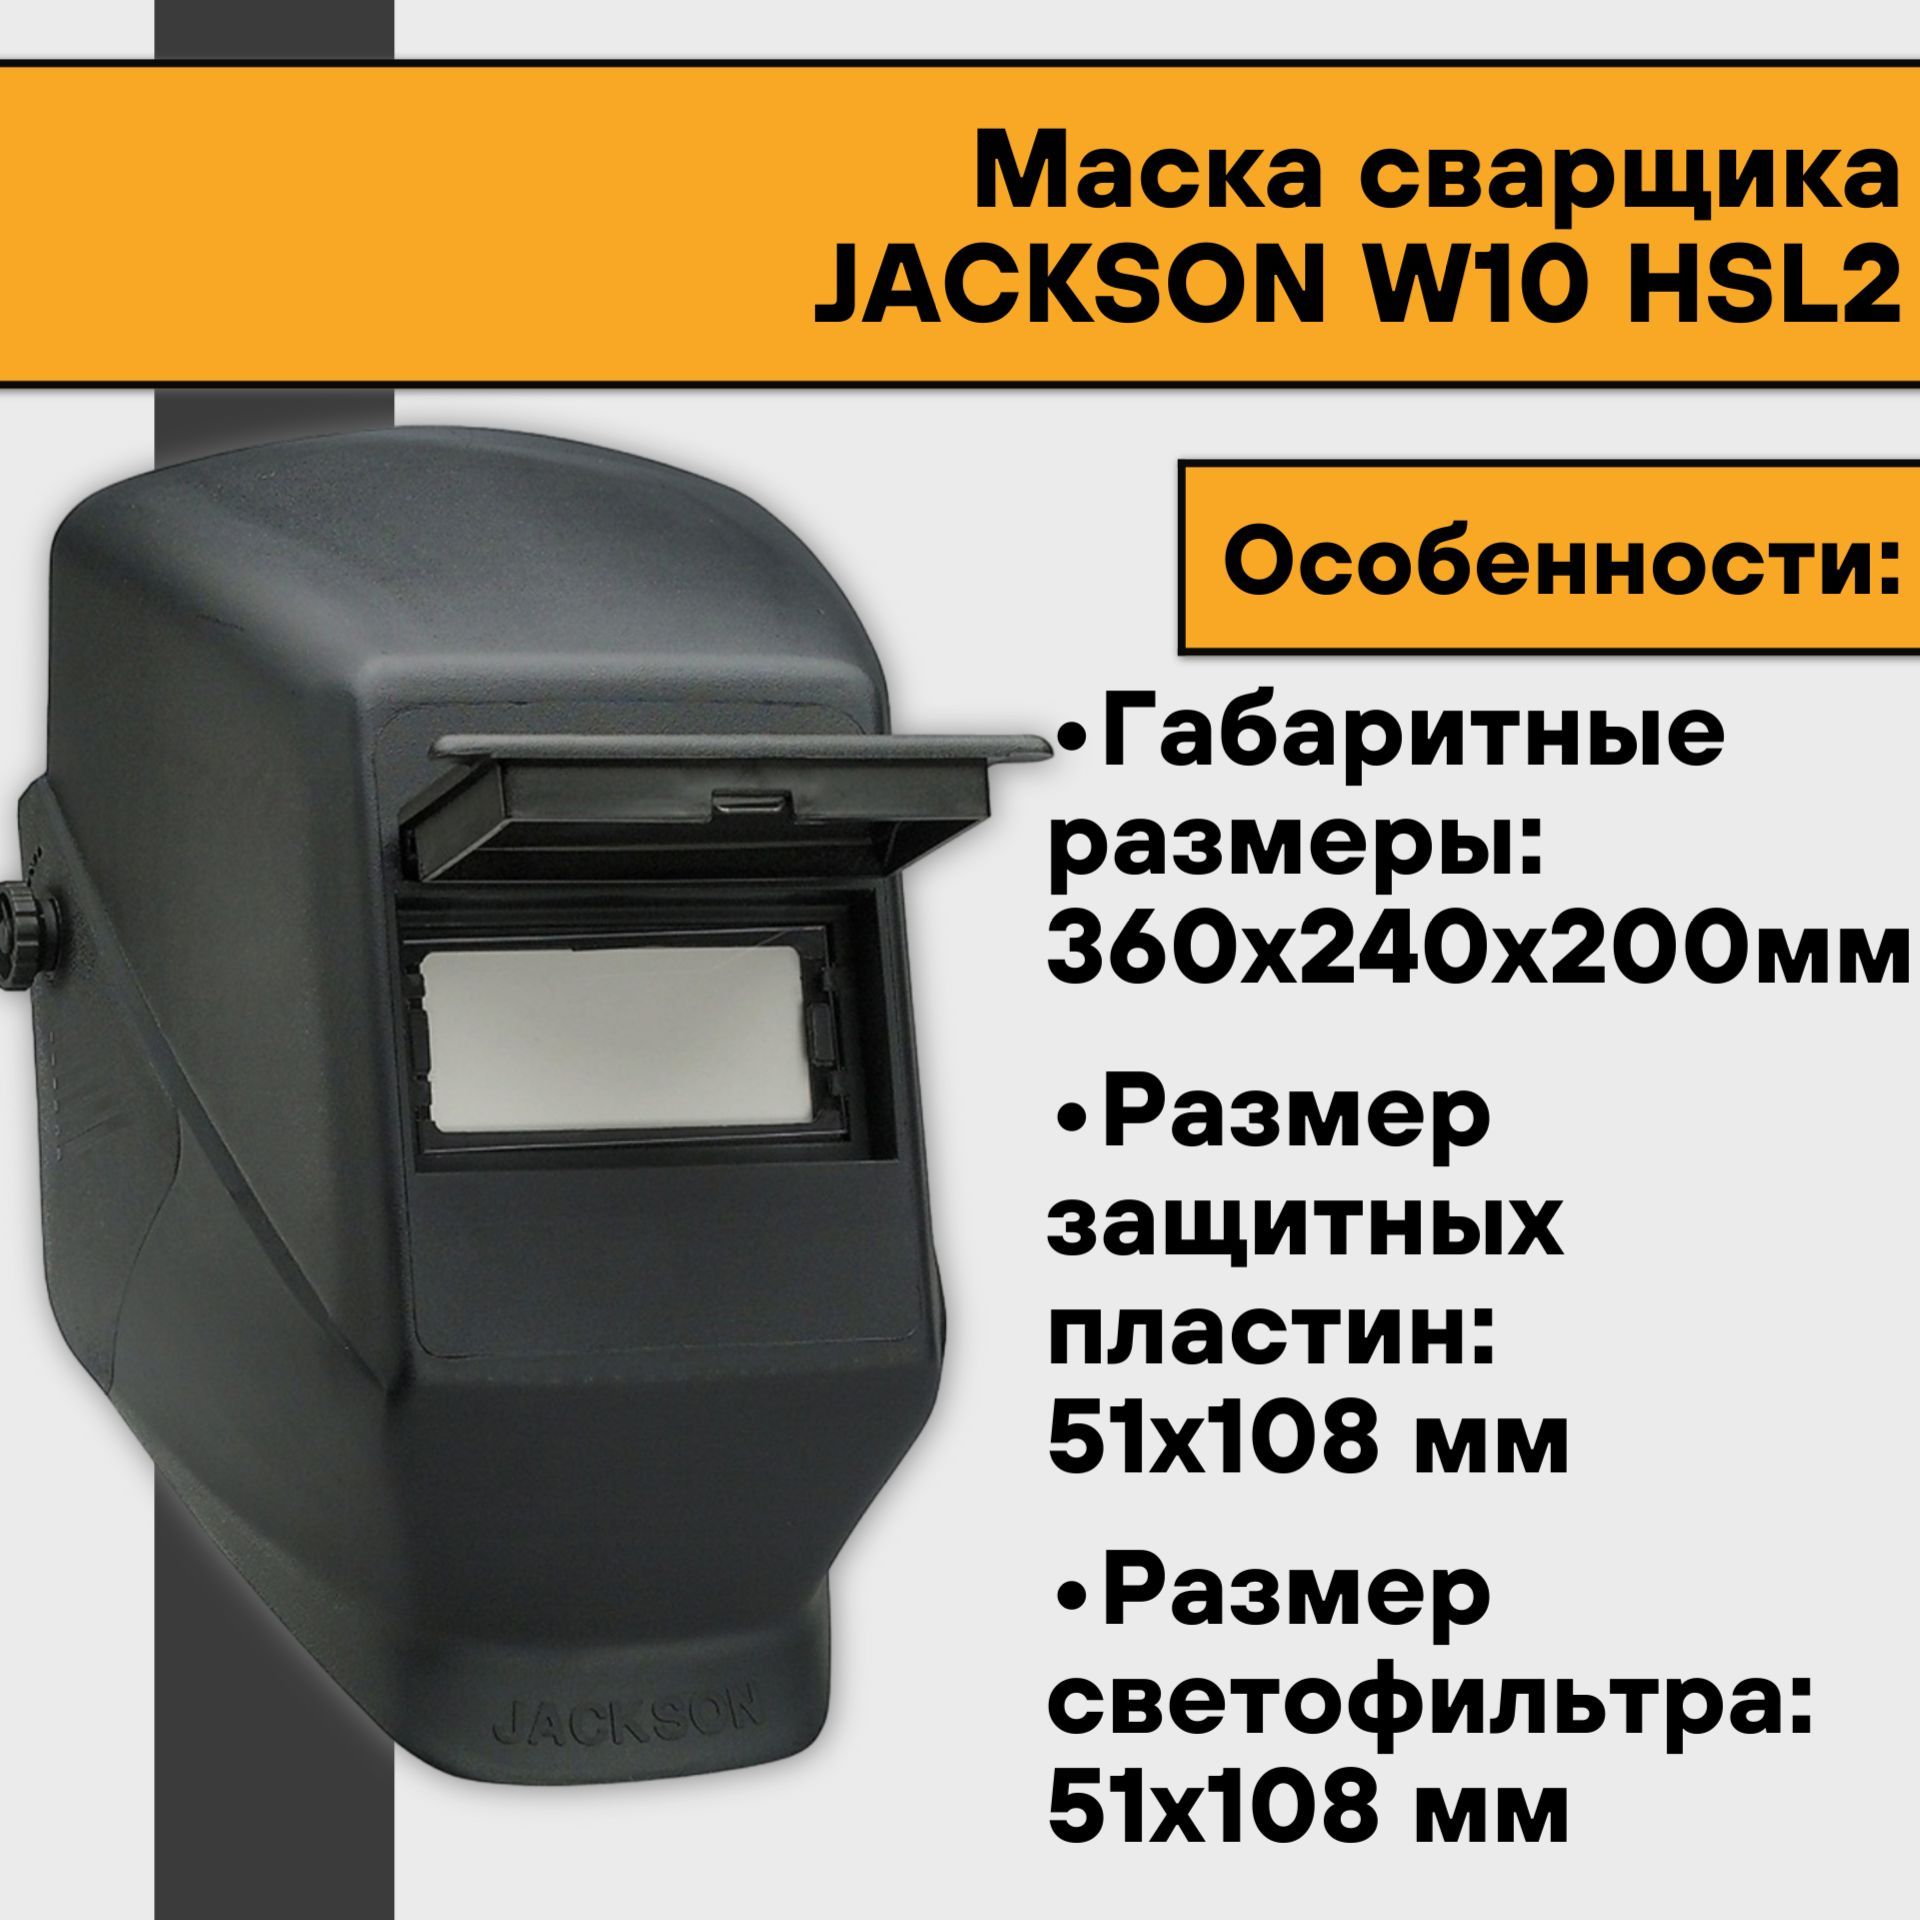 Маска сварщика JACKSON W10 HSL2